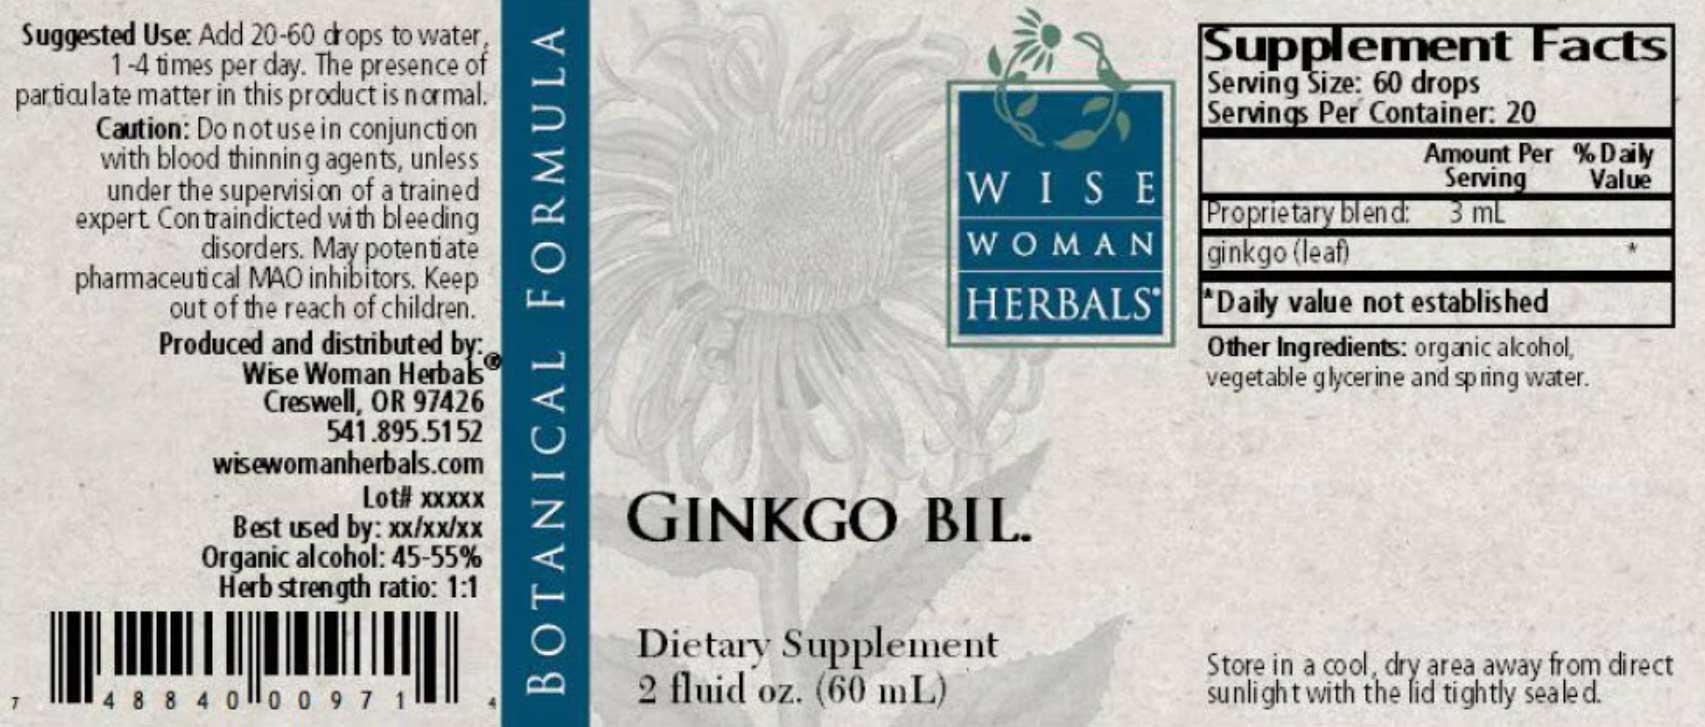 Wise Woman Herbals Ginkgo Biloba Label